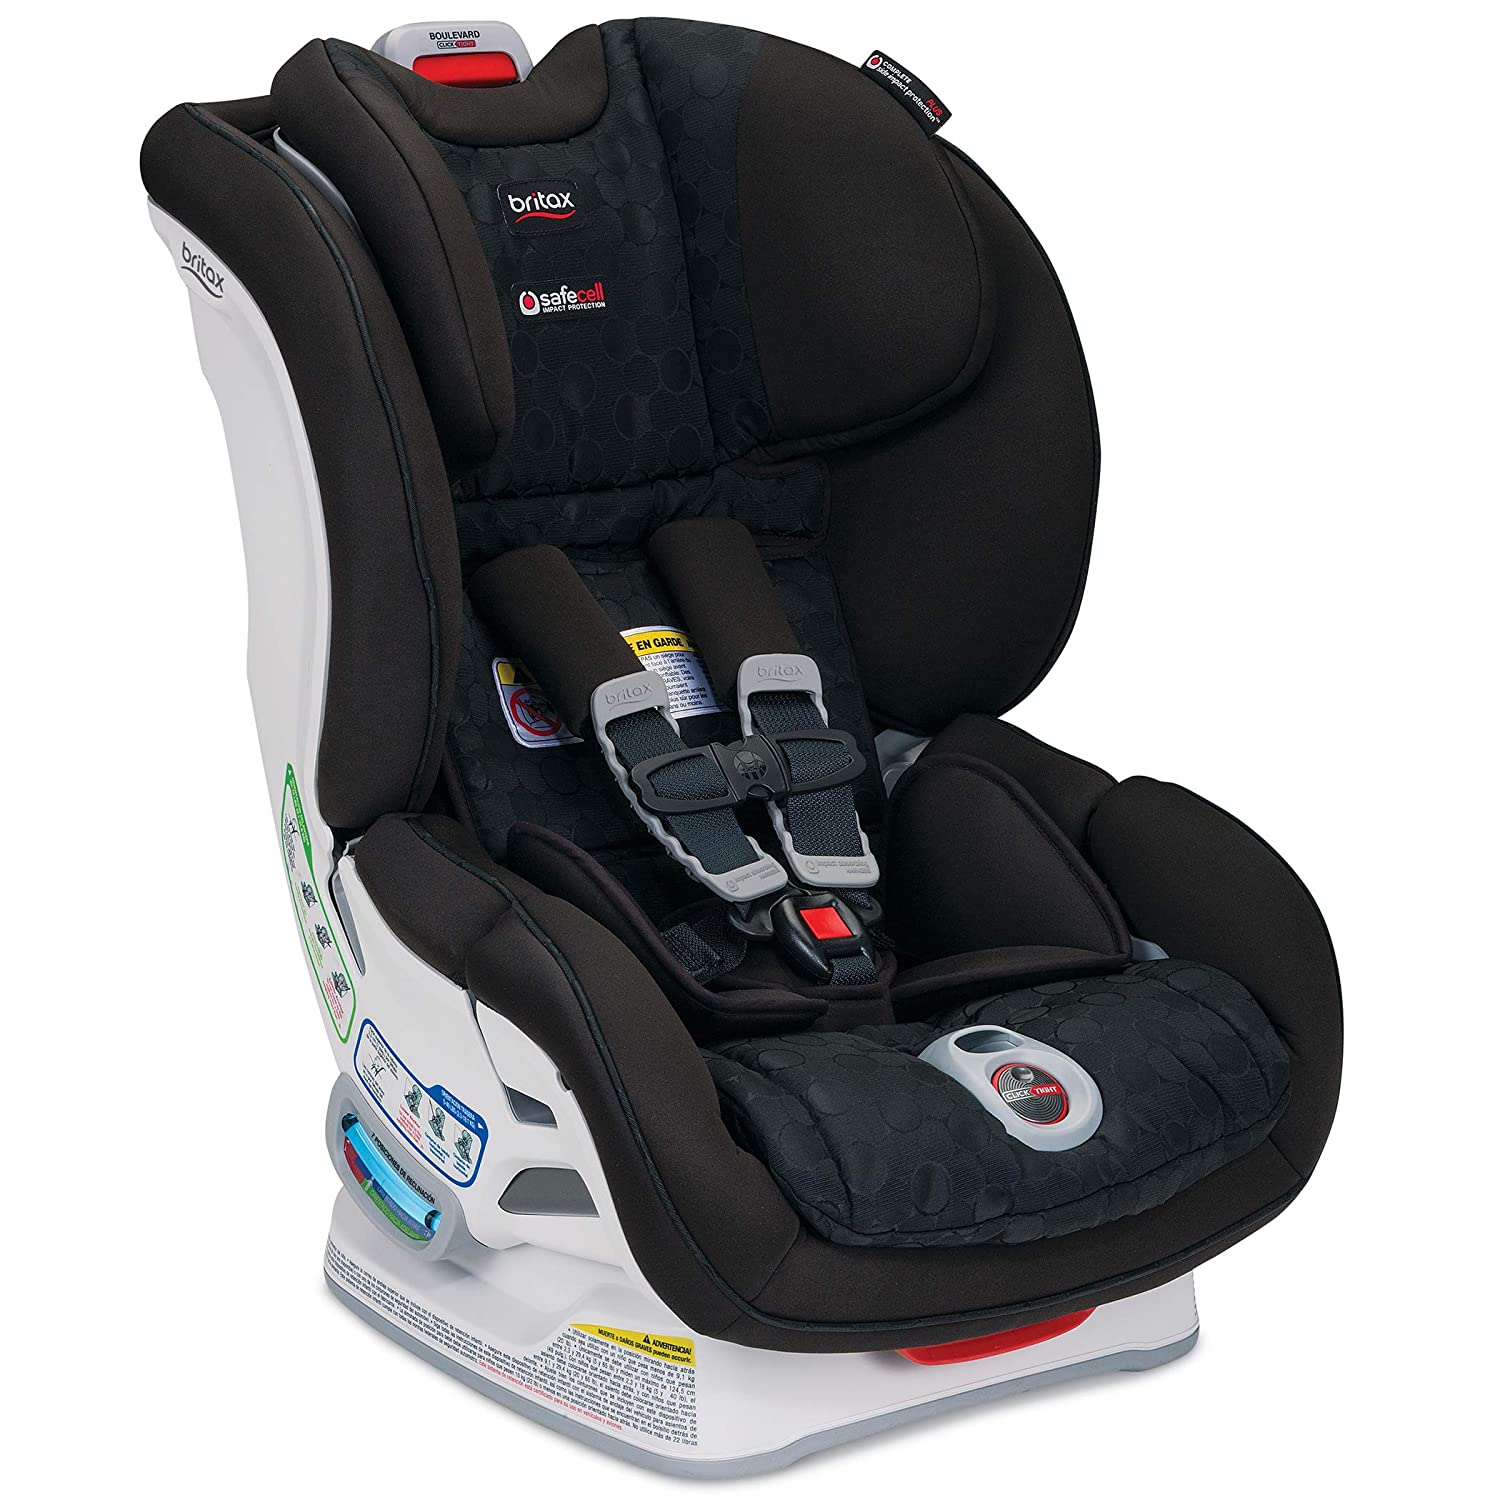 Top 4 Best Convertible Car Seat for Newborns Reviews in 2022 3